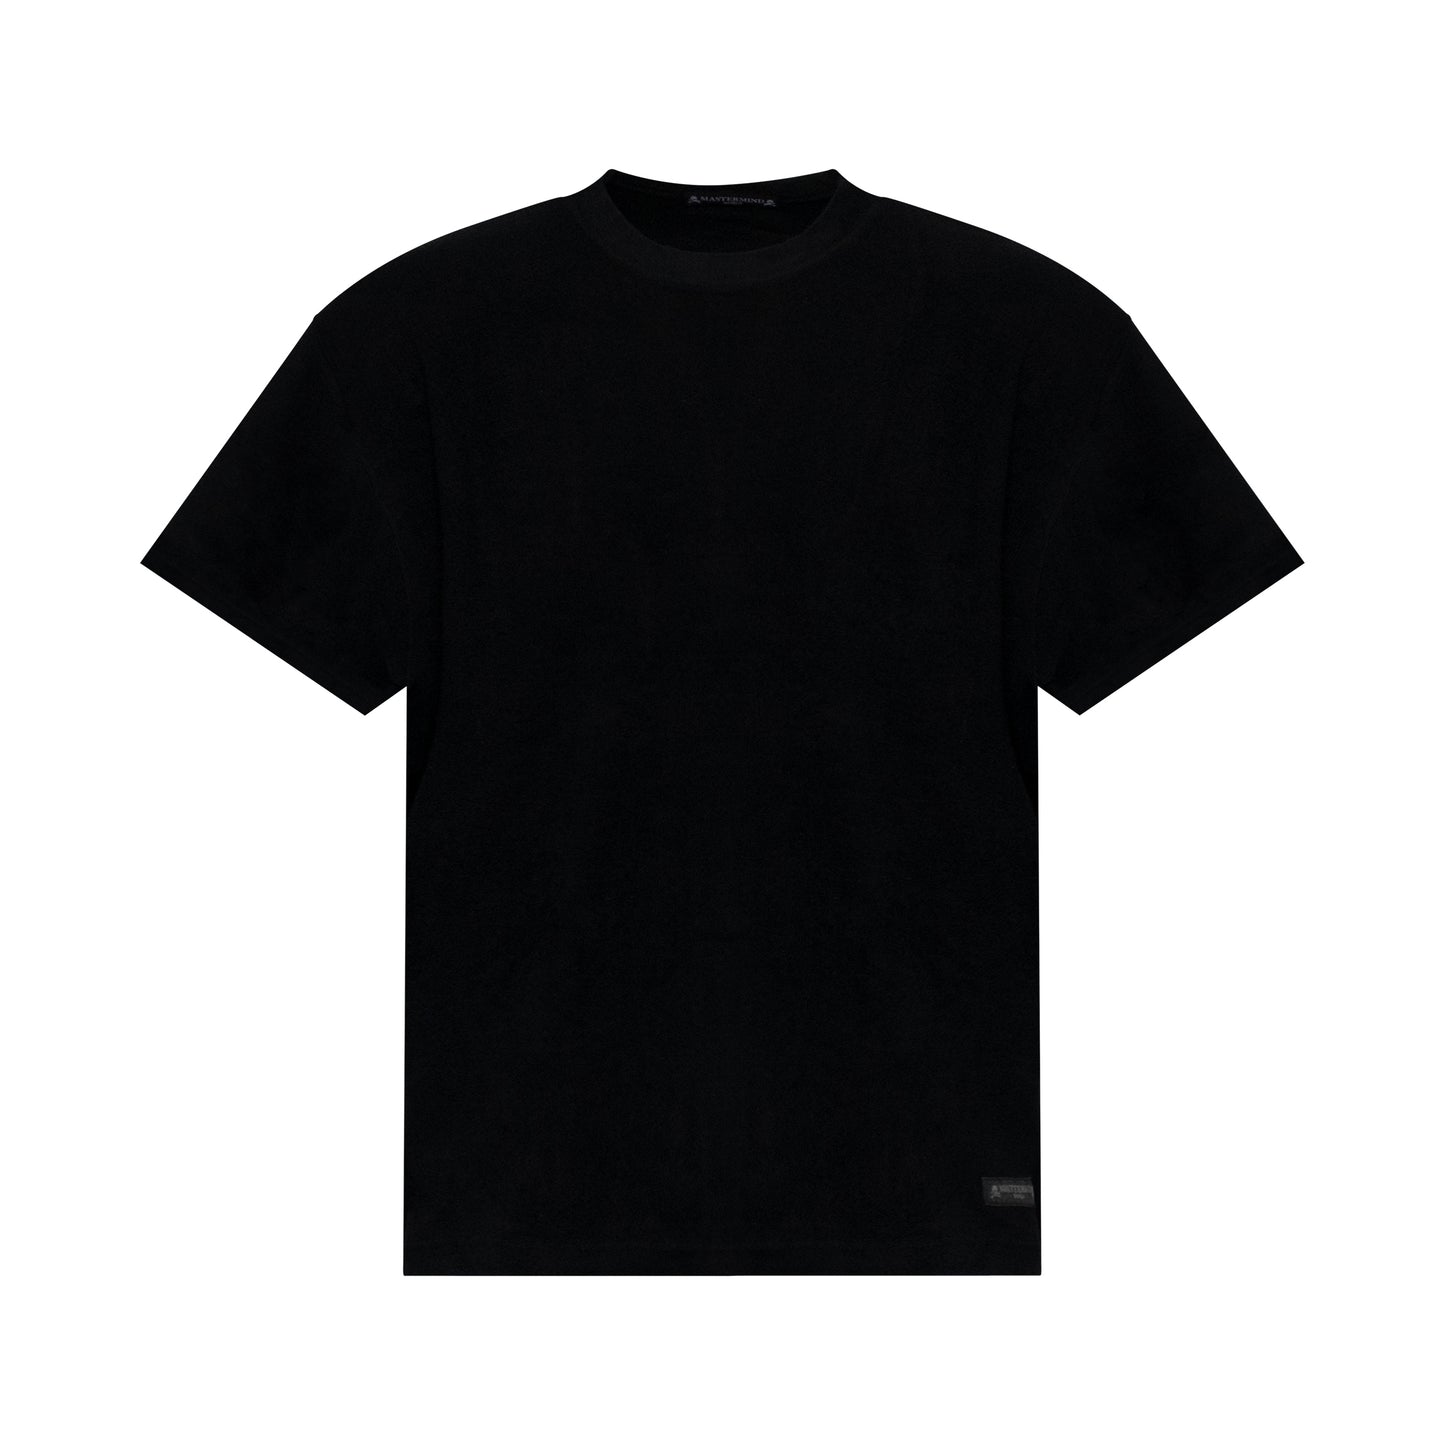 Mastermind World T-Shirts in Black